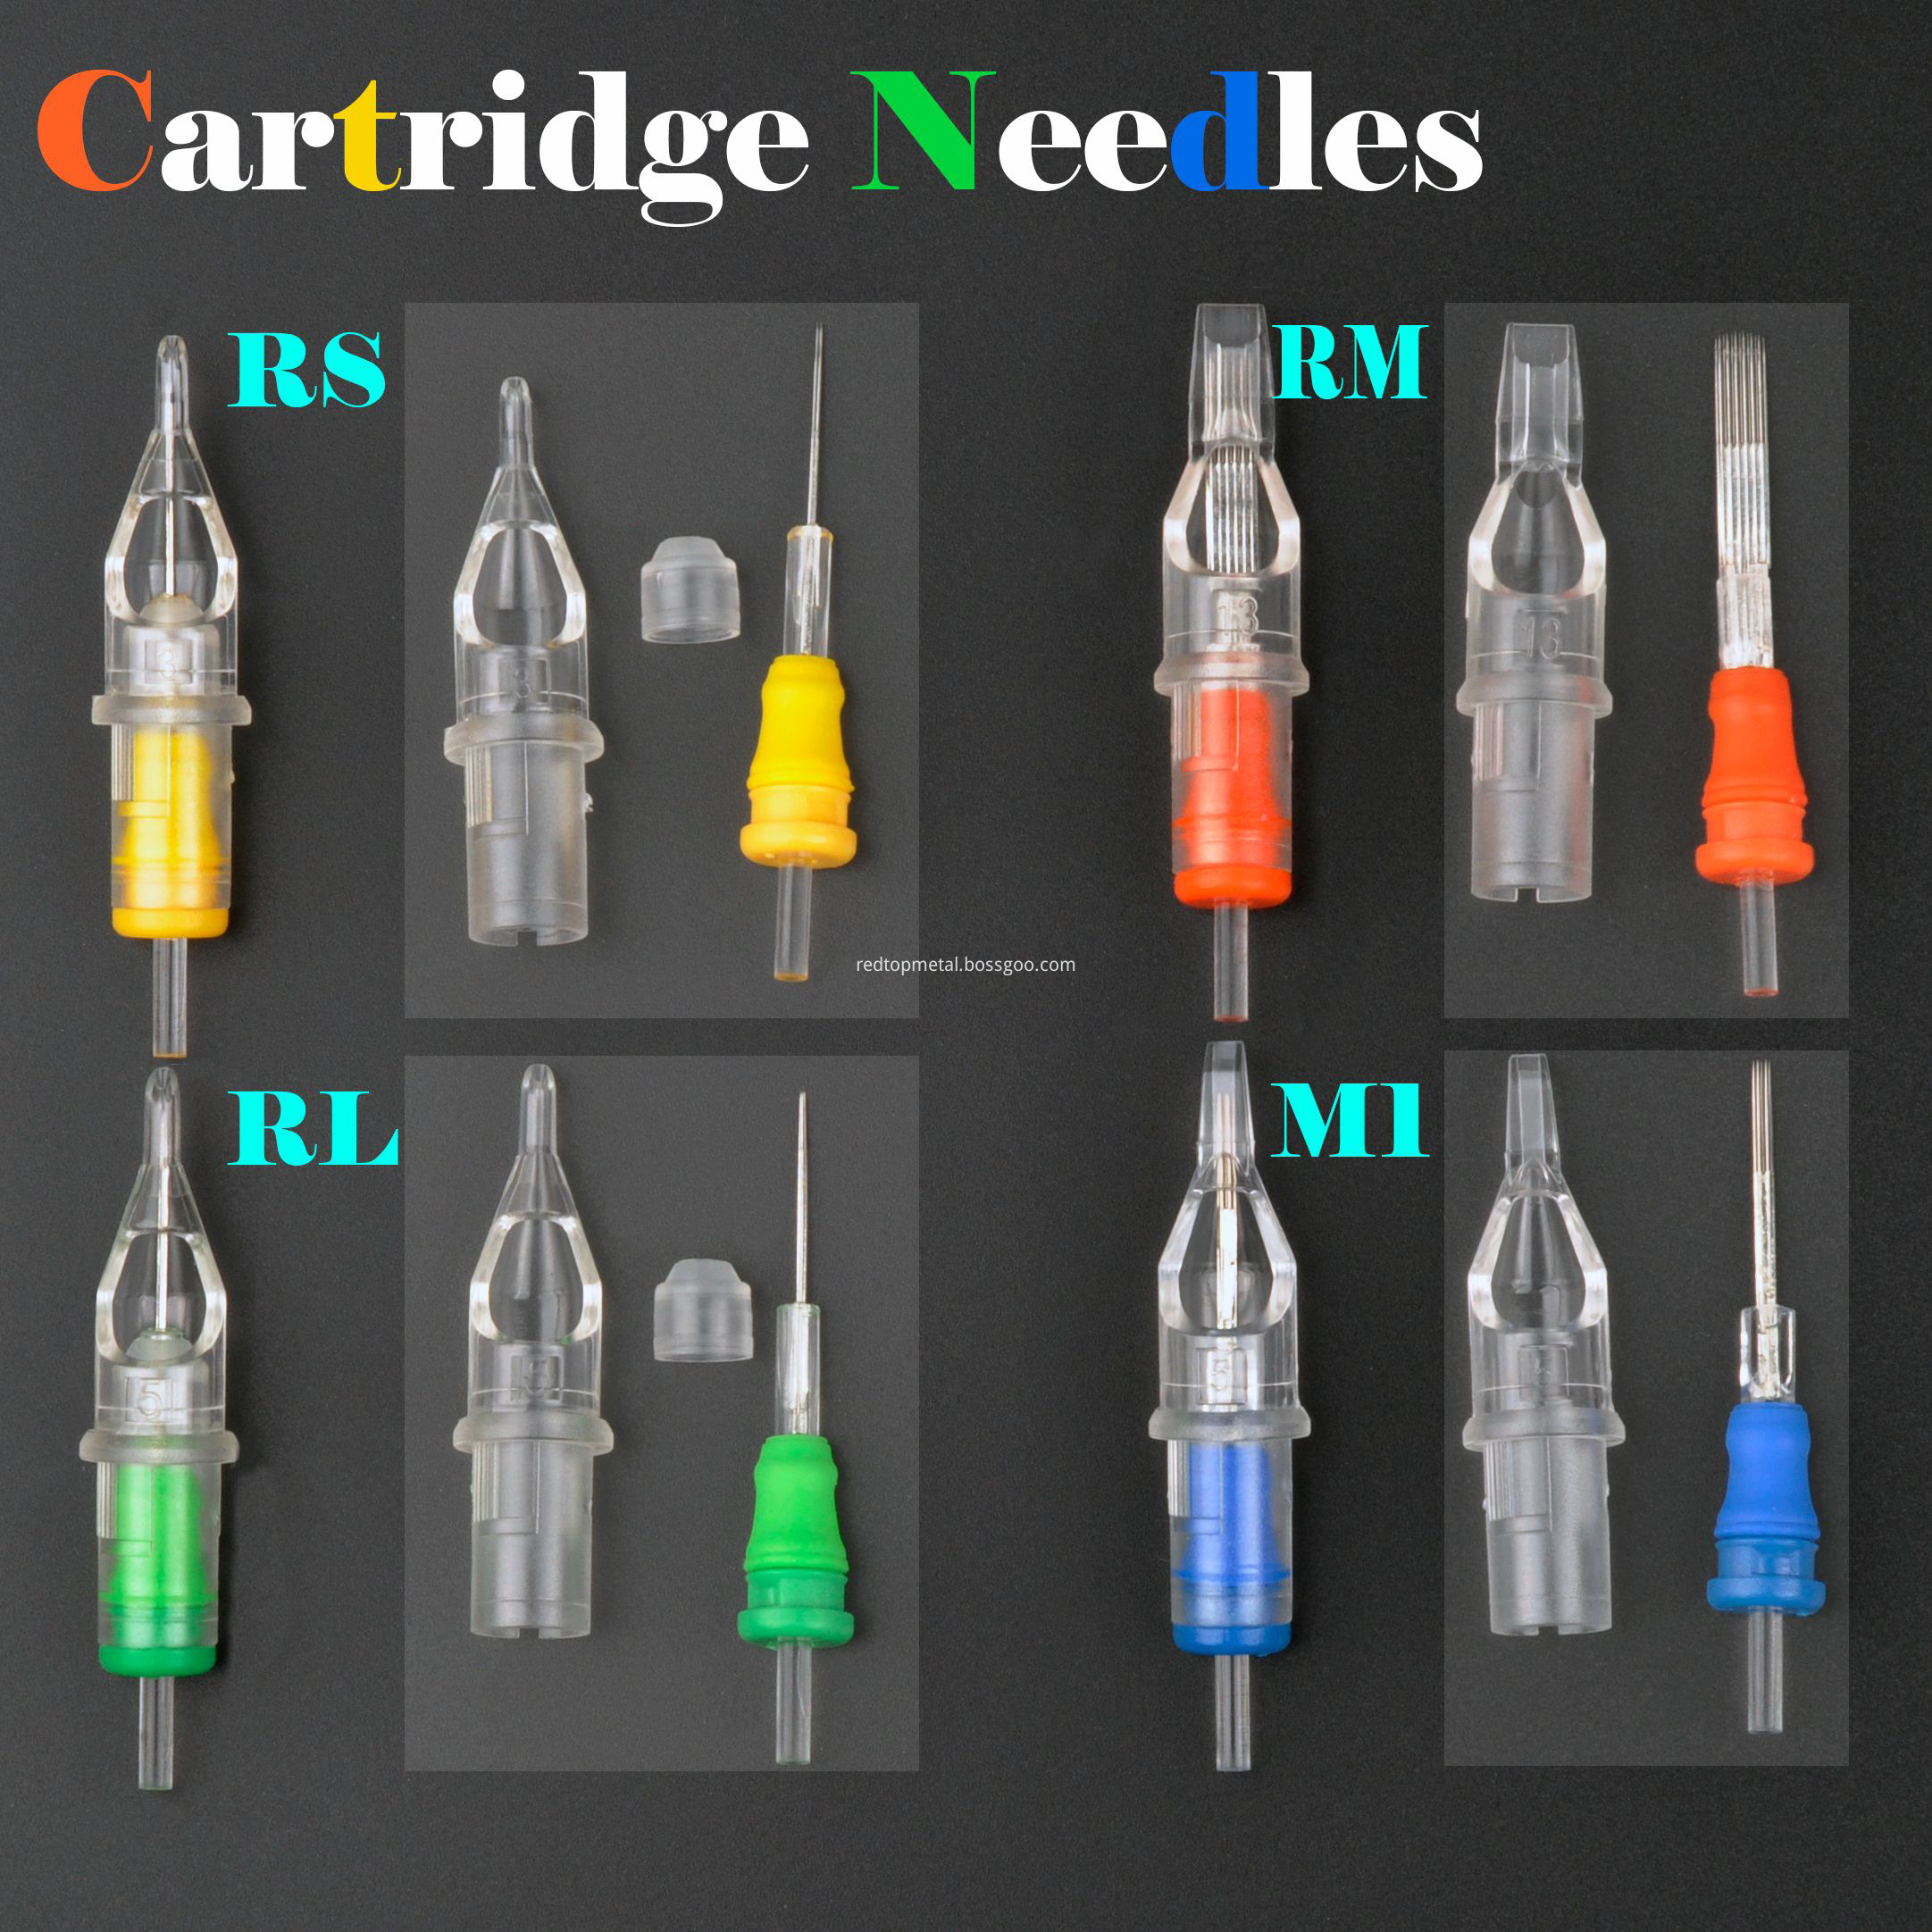 SPARK Truecolor Needle Cartridge